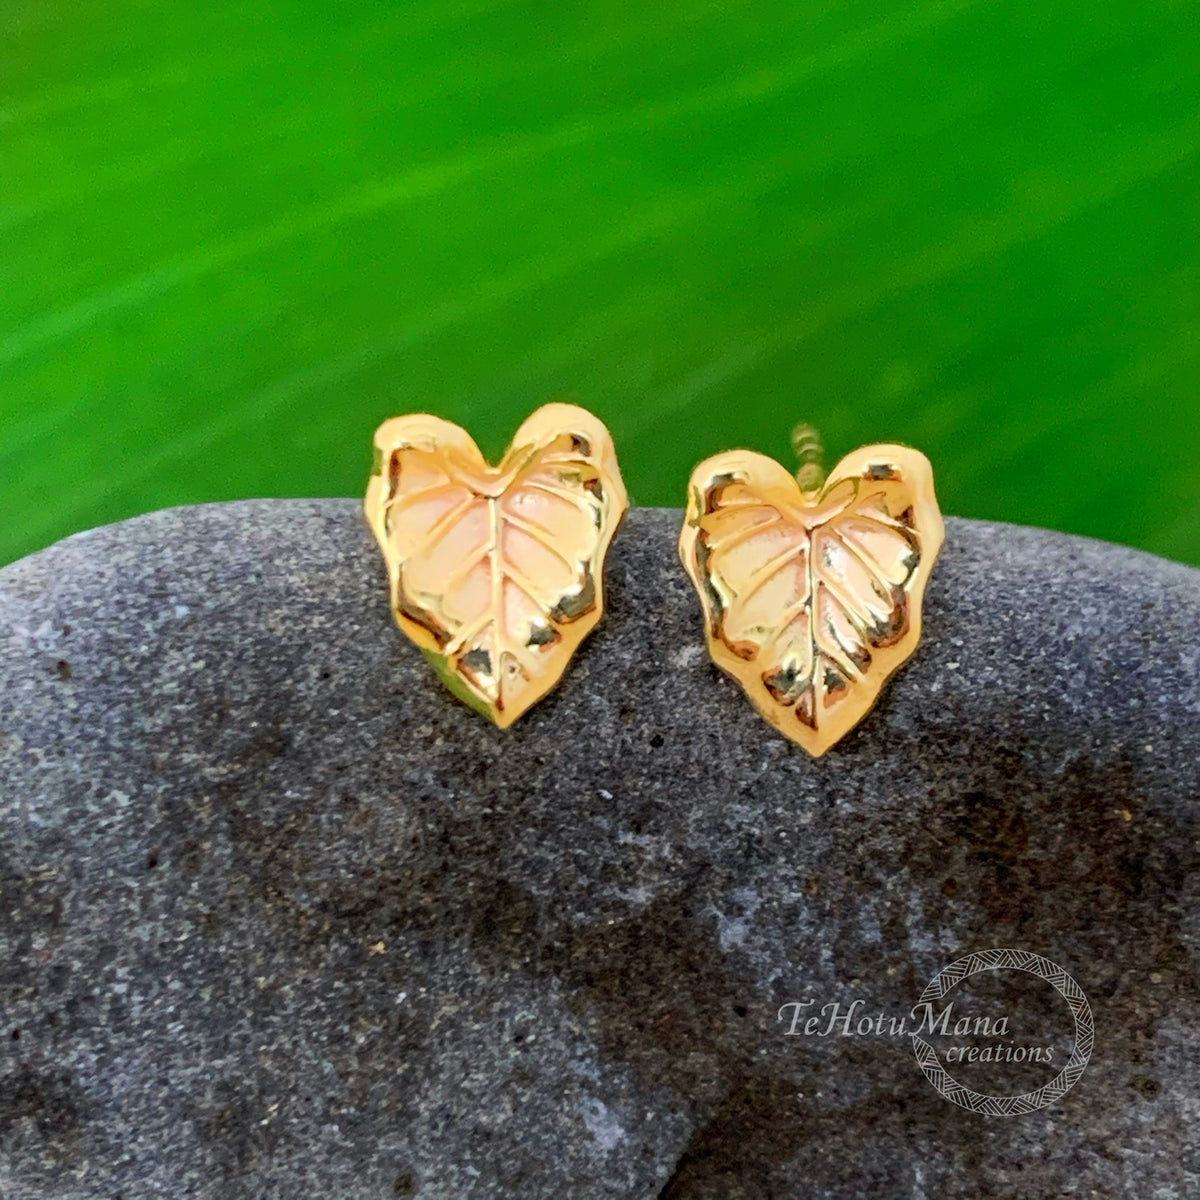 Pop-Up Mākeke - Te Hotu Mana Creations - Kalo Leaf Yellow Gold-Filled Stud Earrings